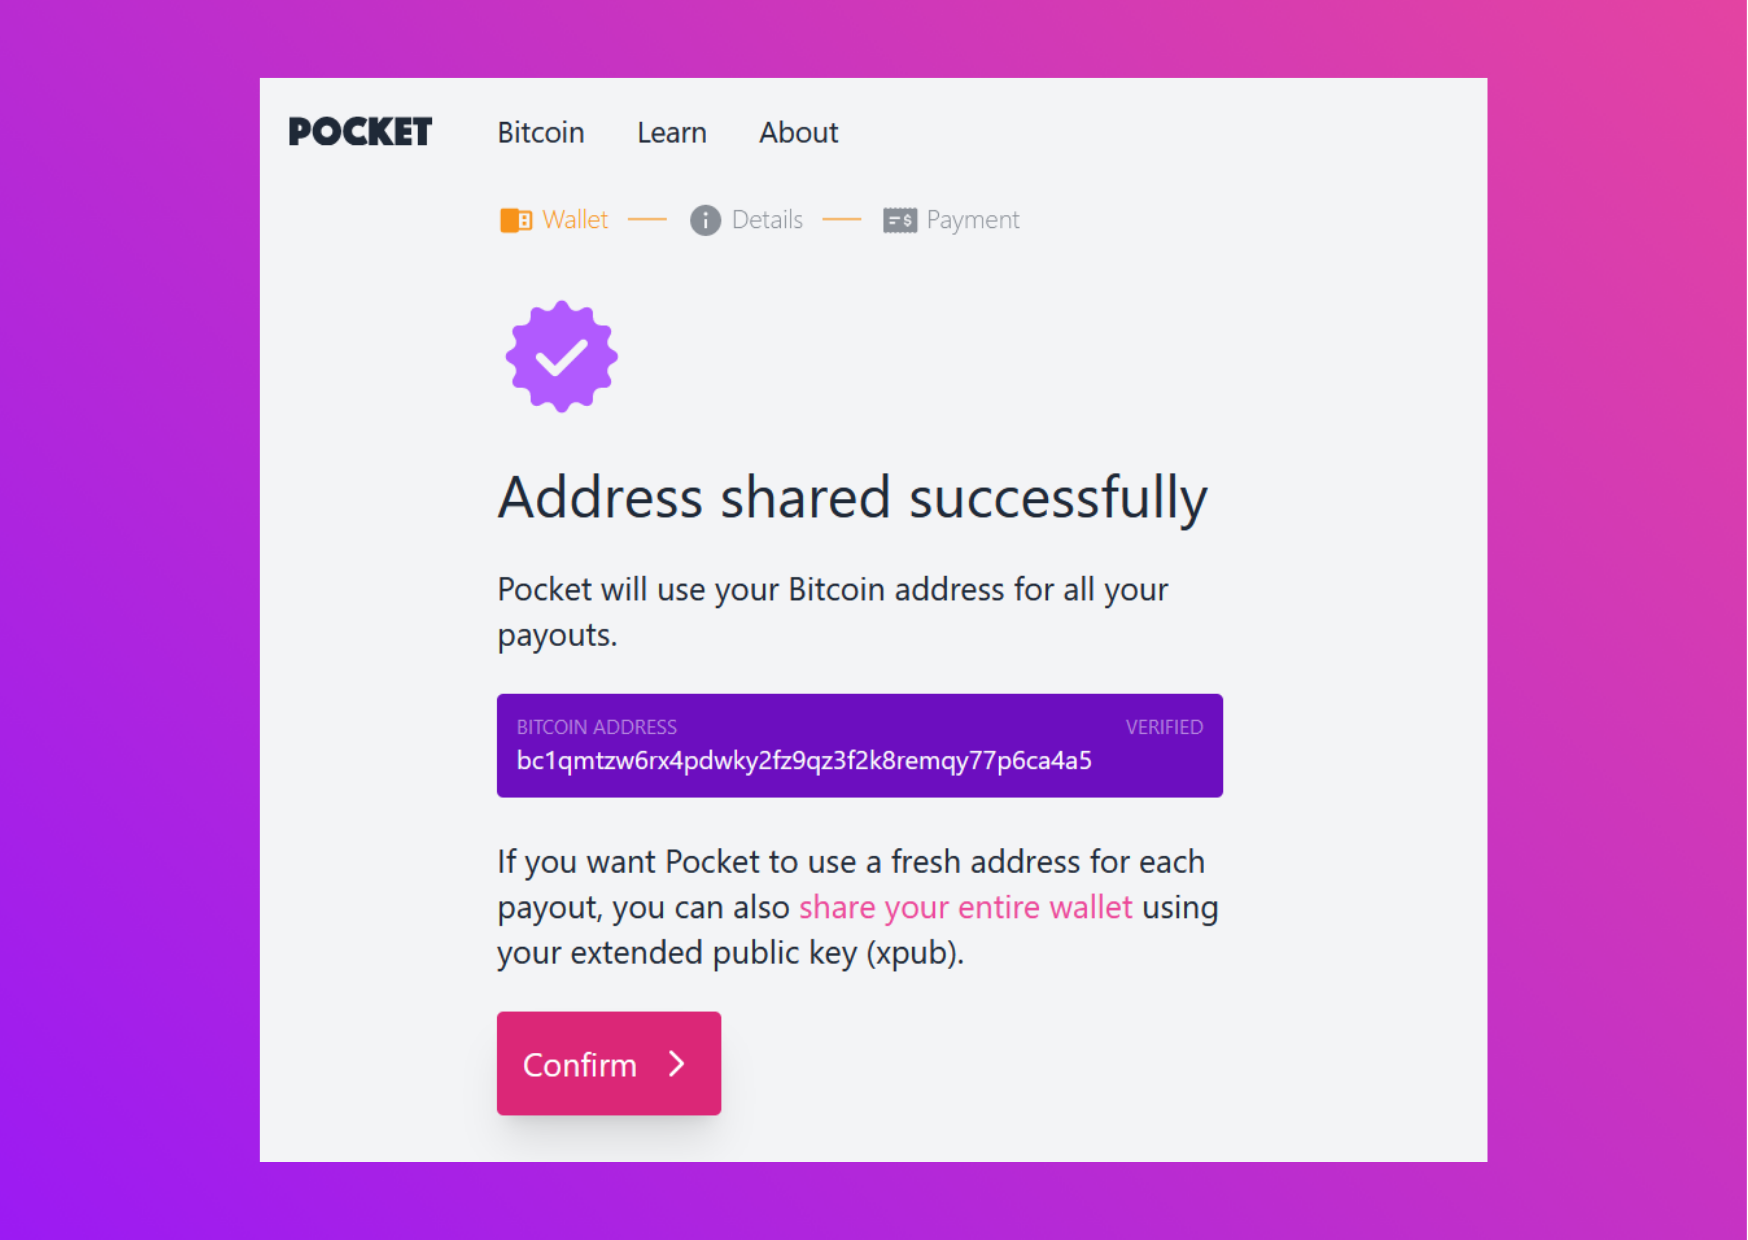 Screen capture Pocket website address successfully shared